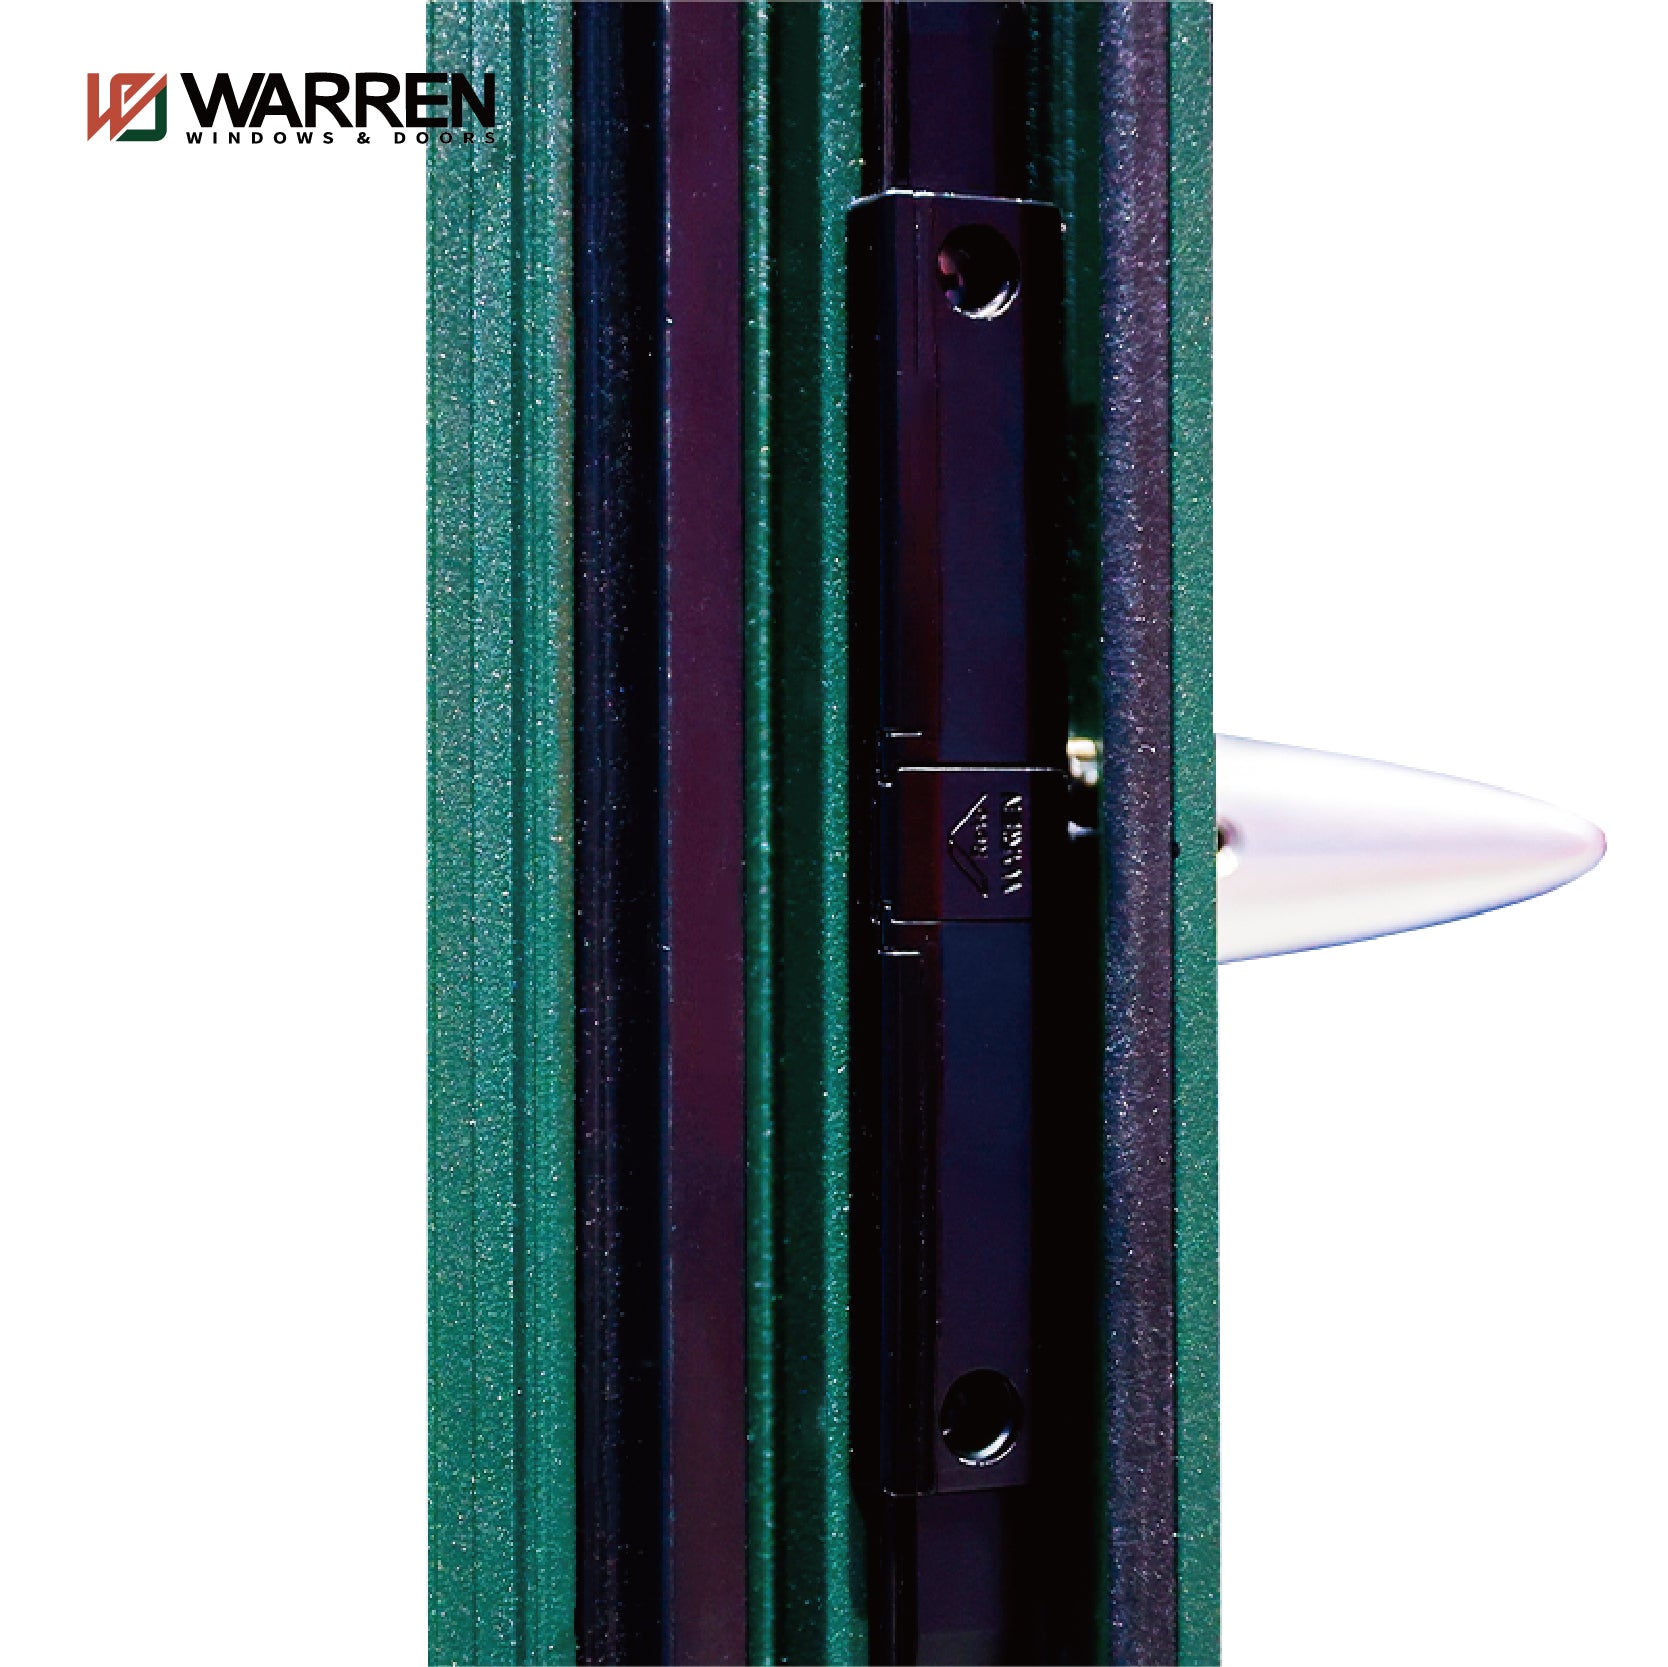 Warren New Style Aluminum Windows  Casement Swing Single Hung Folding Tilt Turn Windows